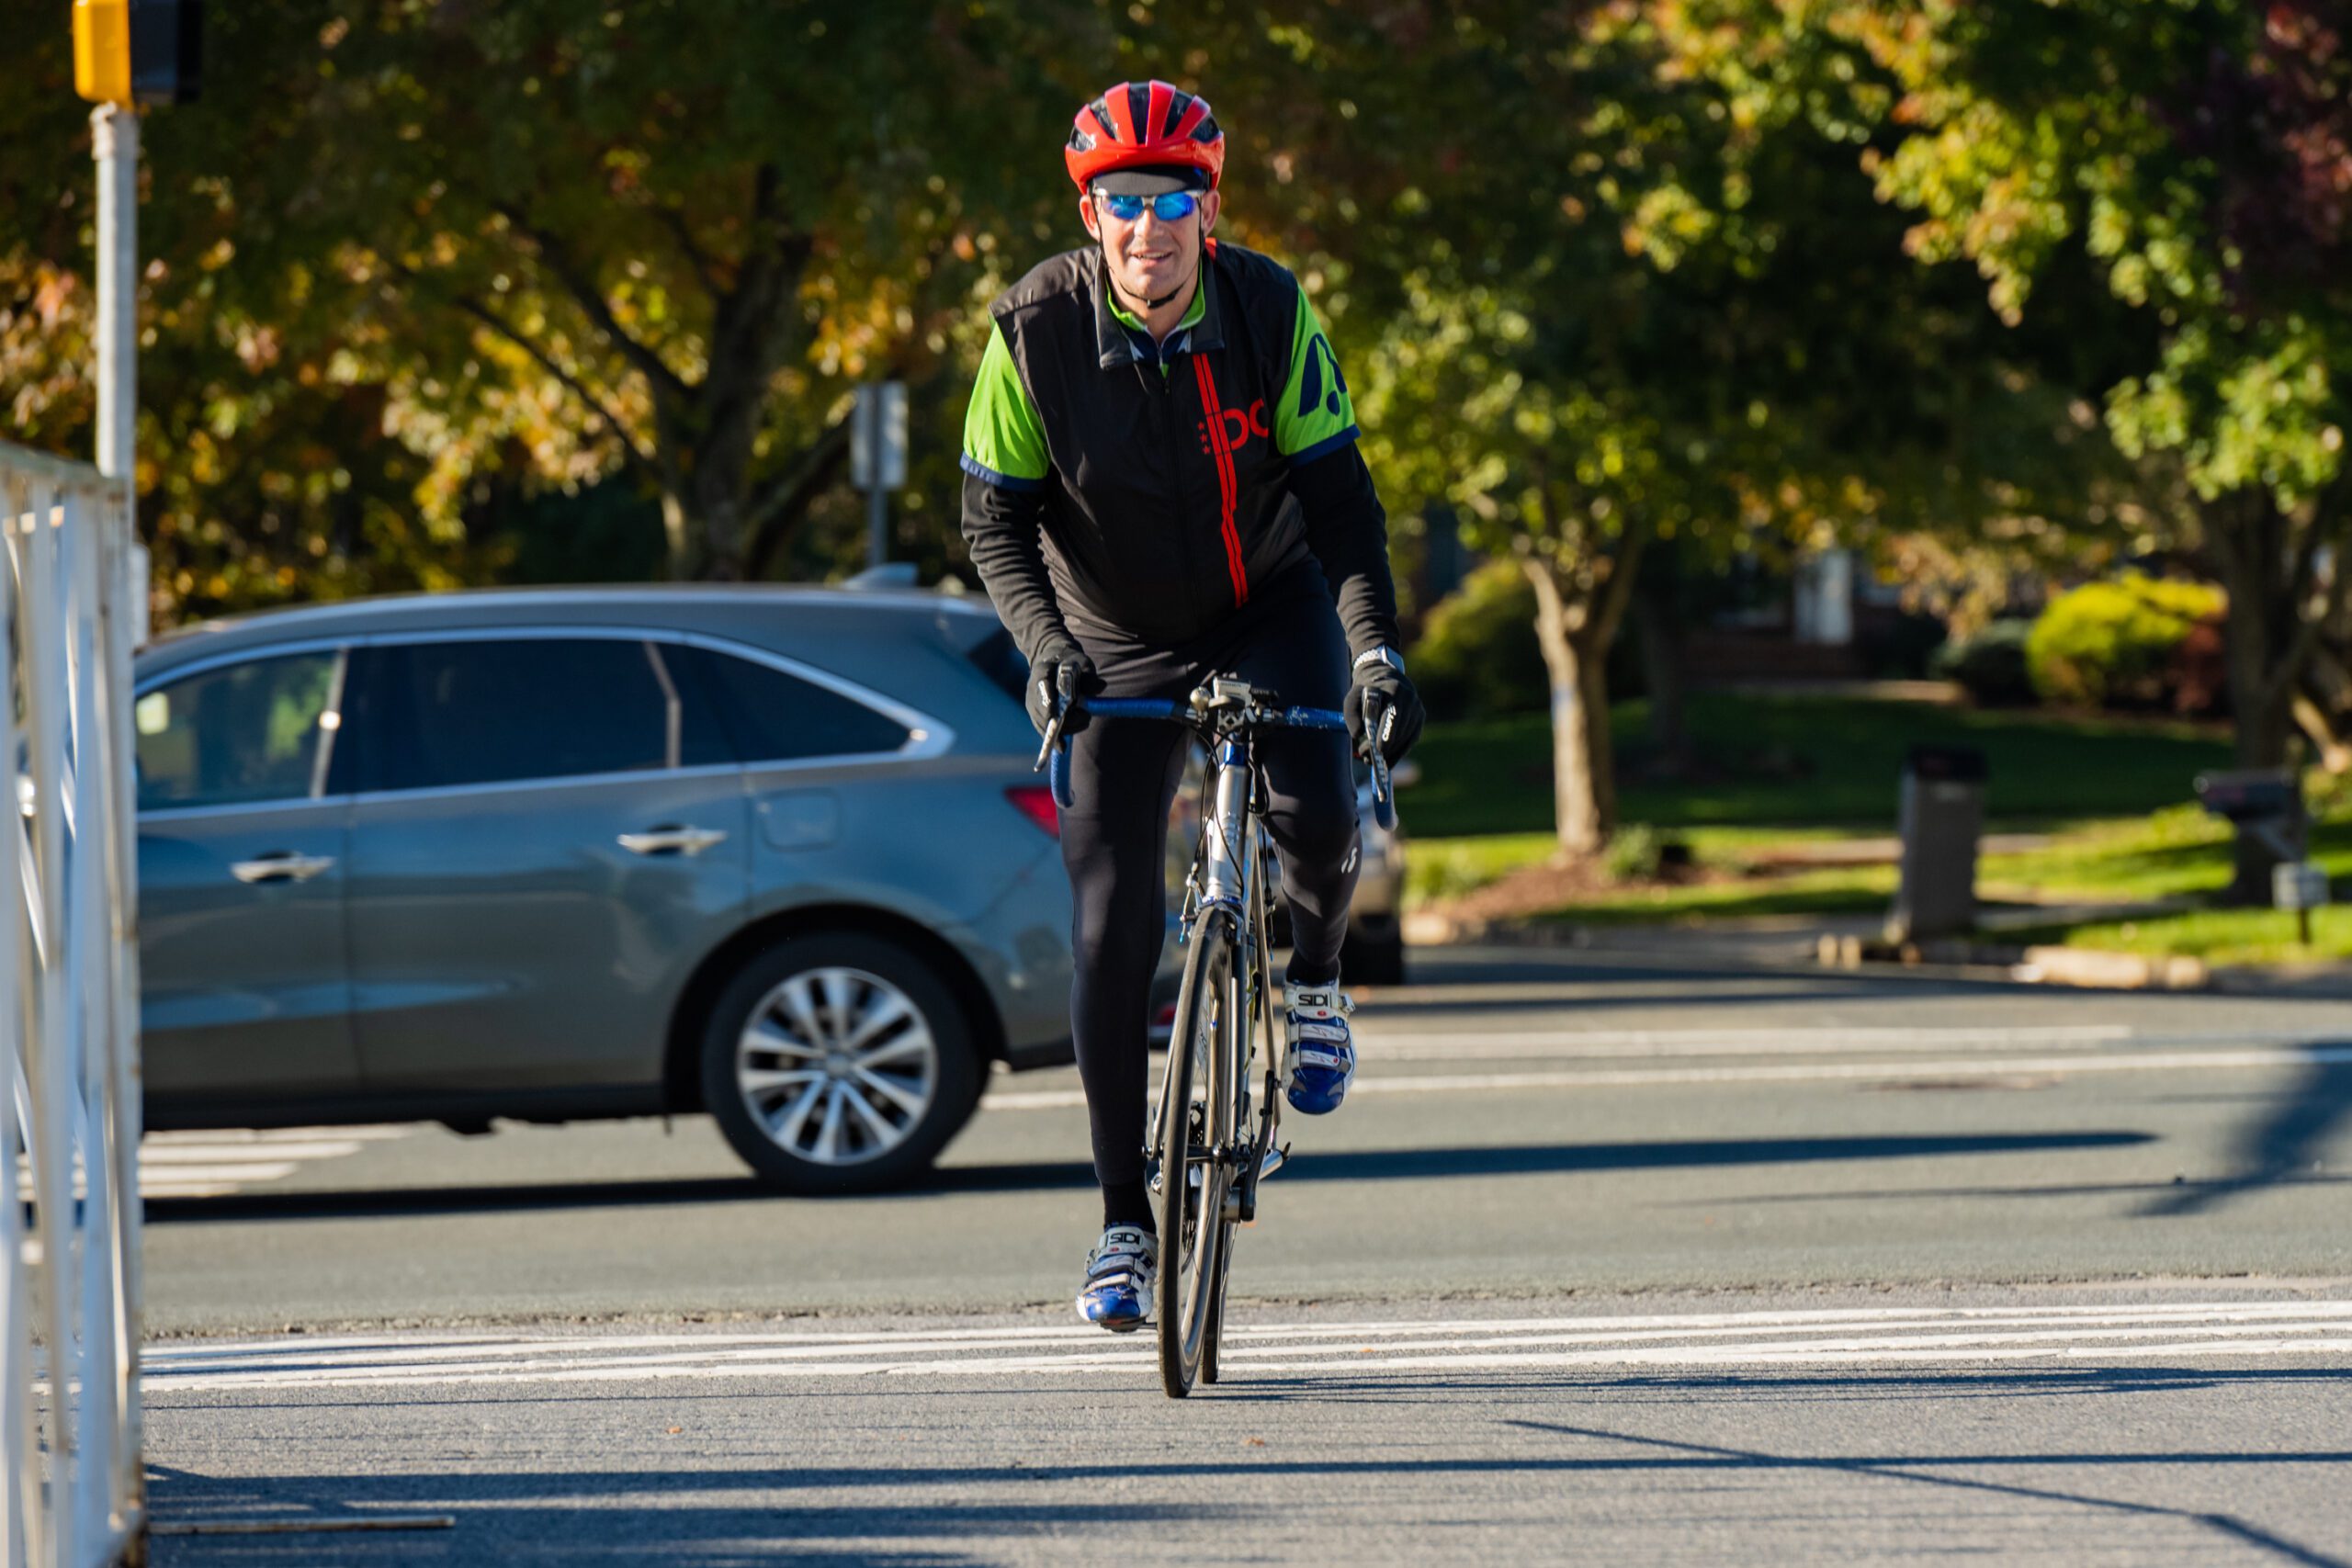 BellRinger rider riding their bike leaving a parking lot